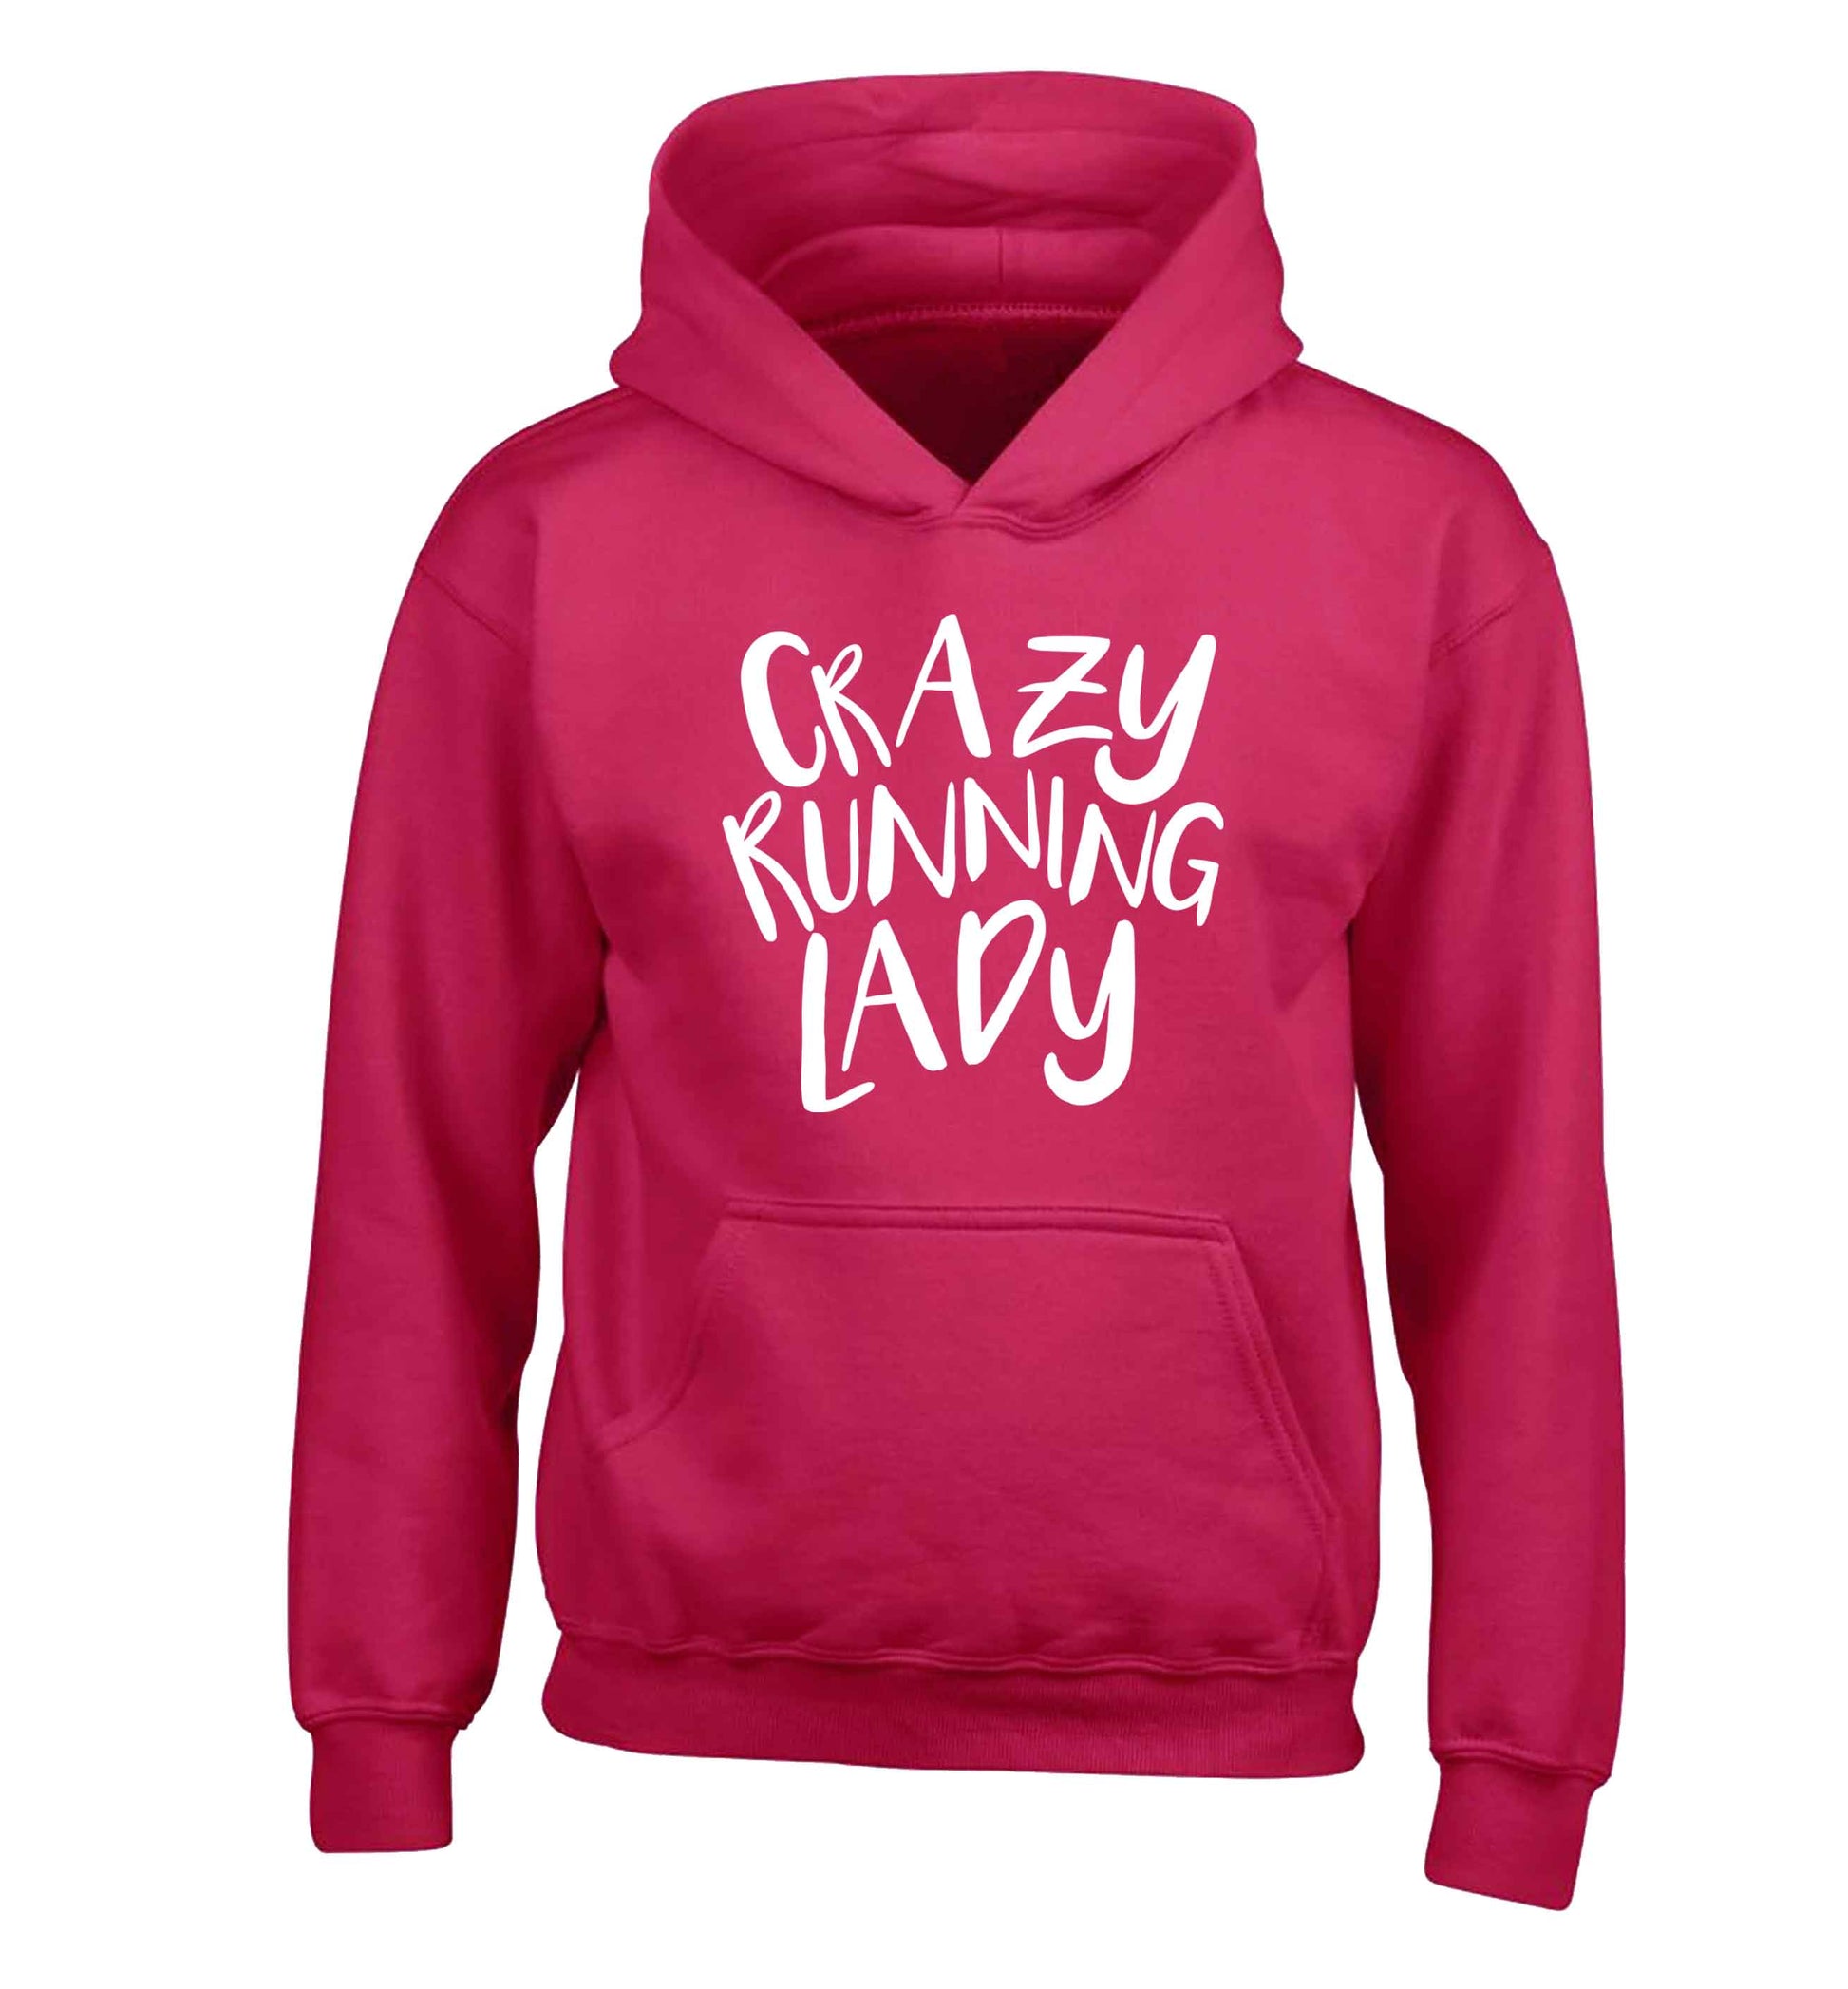 Crazy running lady children's pink hoodie 12-13 Years